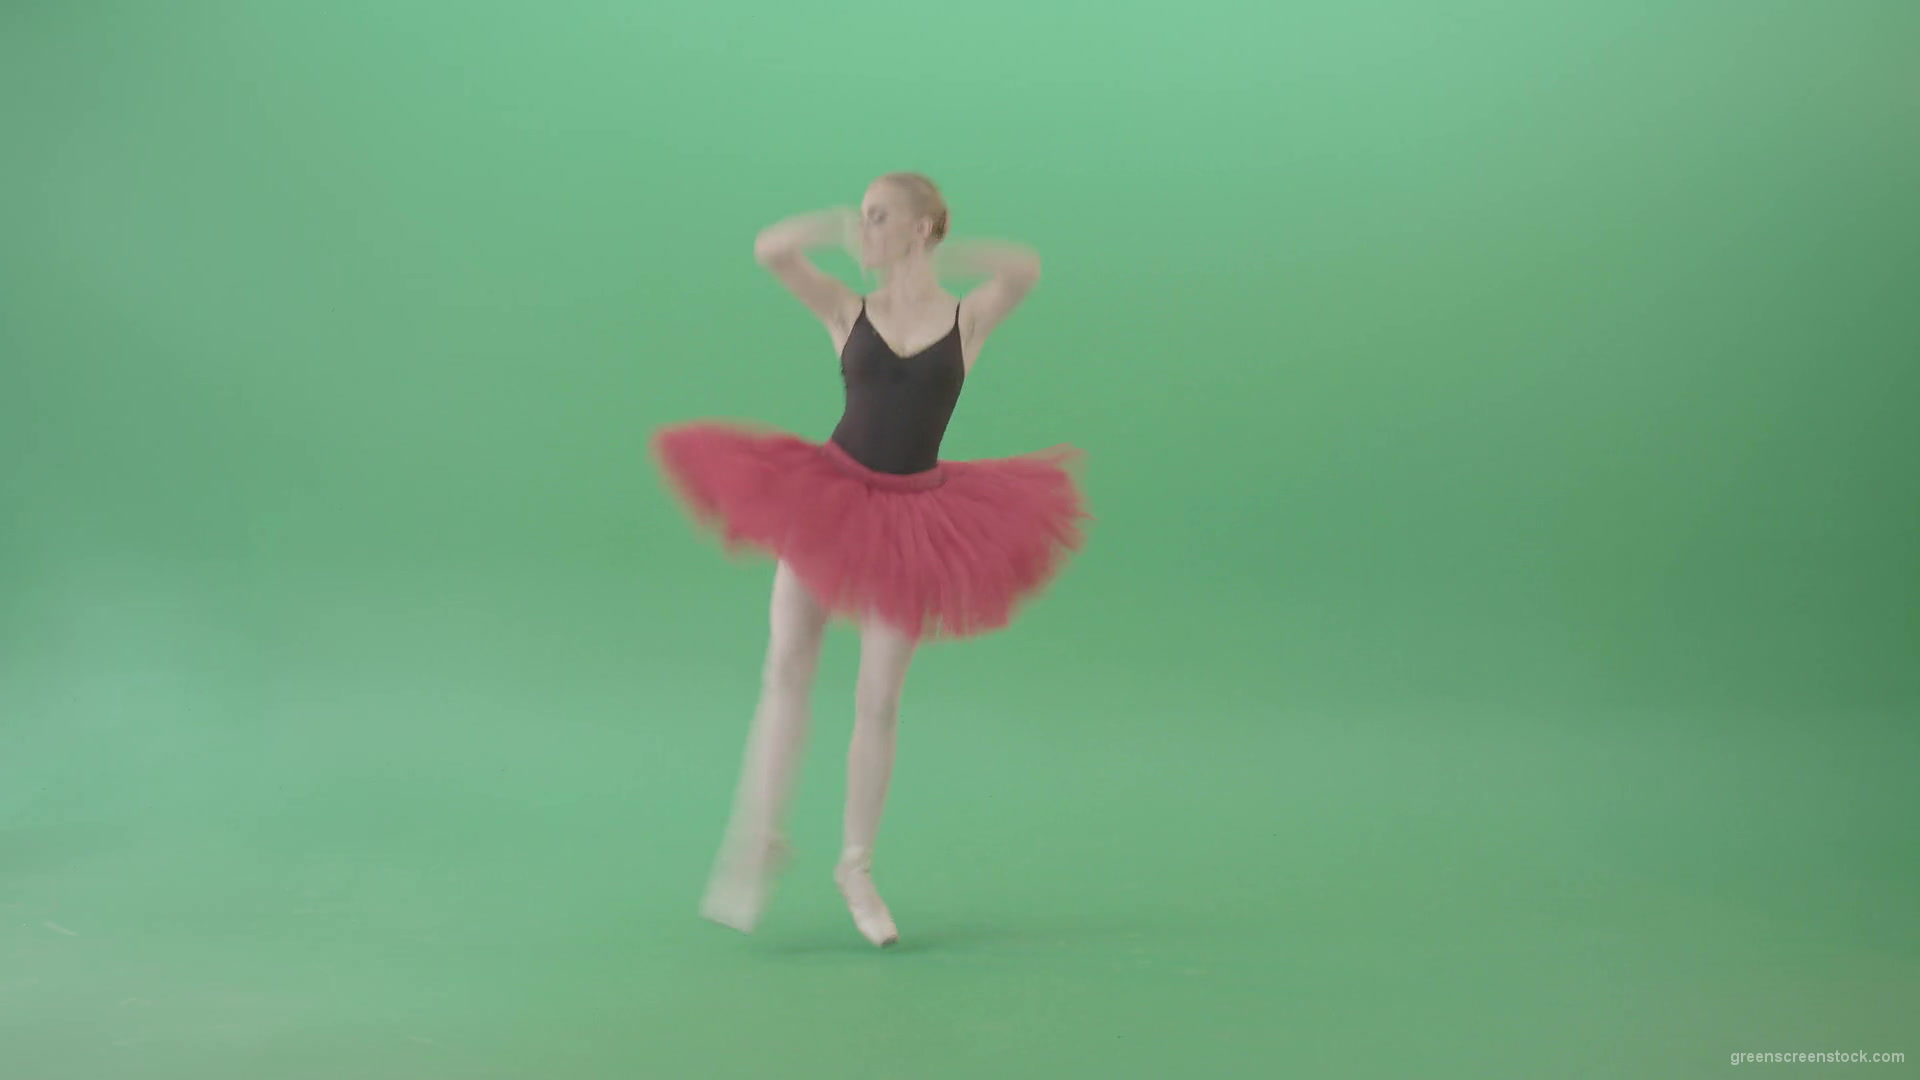 Classical-Ballerina-girl-dancing-red-black-ballet-on-green-screen-4K-Video-Footage-1920_008 Green Screen Stock